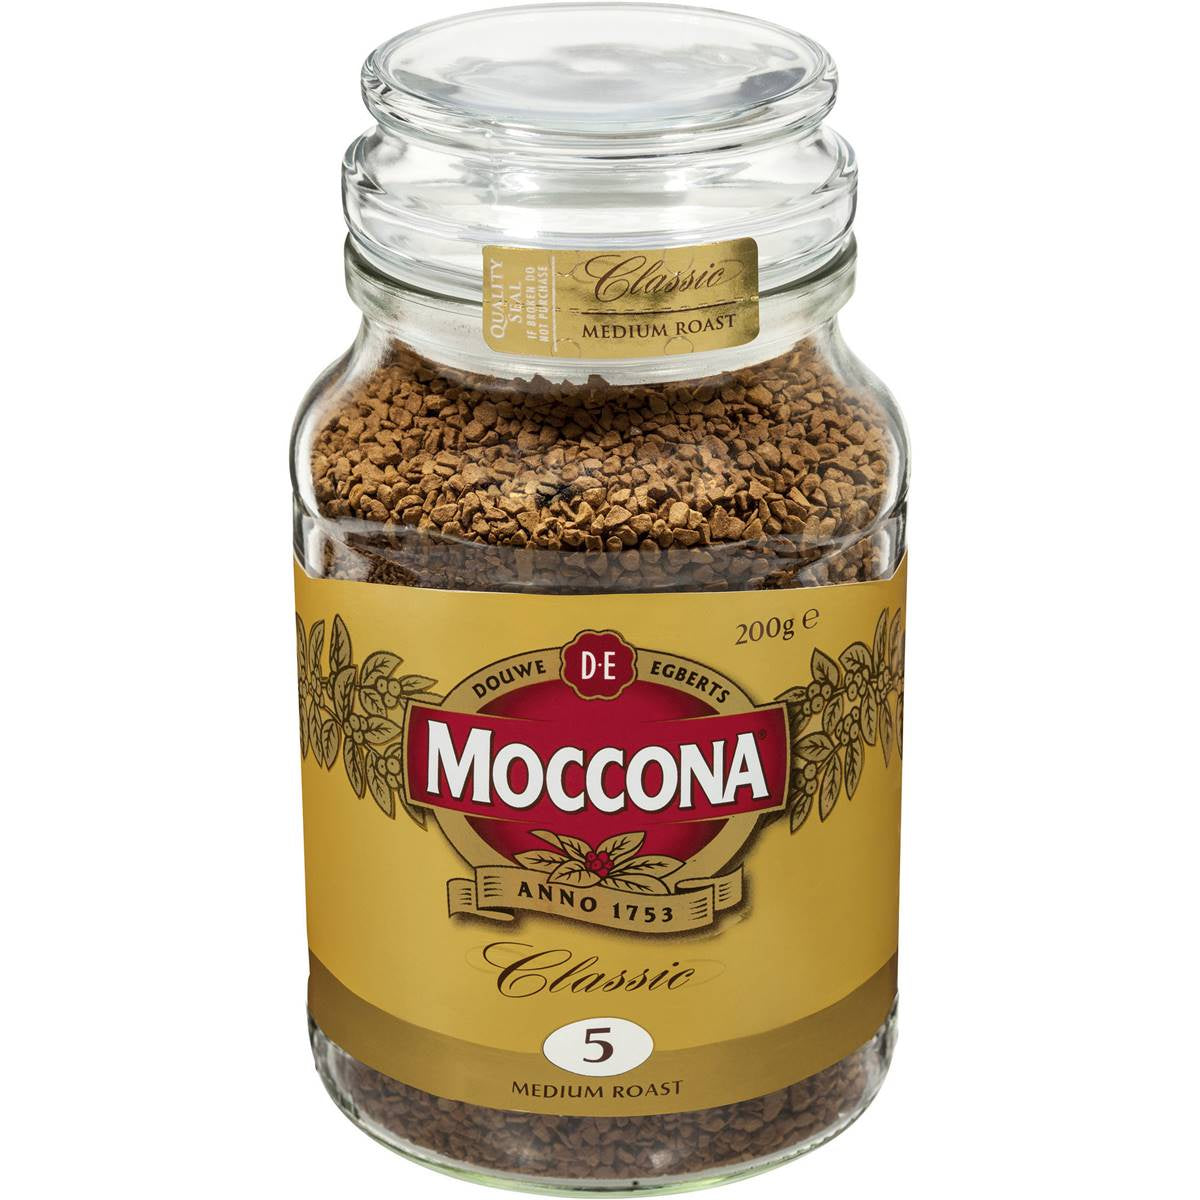 Moccona Freeze Dried Coffee Medium Roast 200g